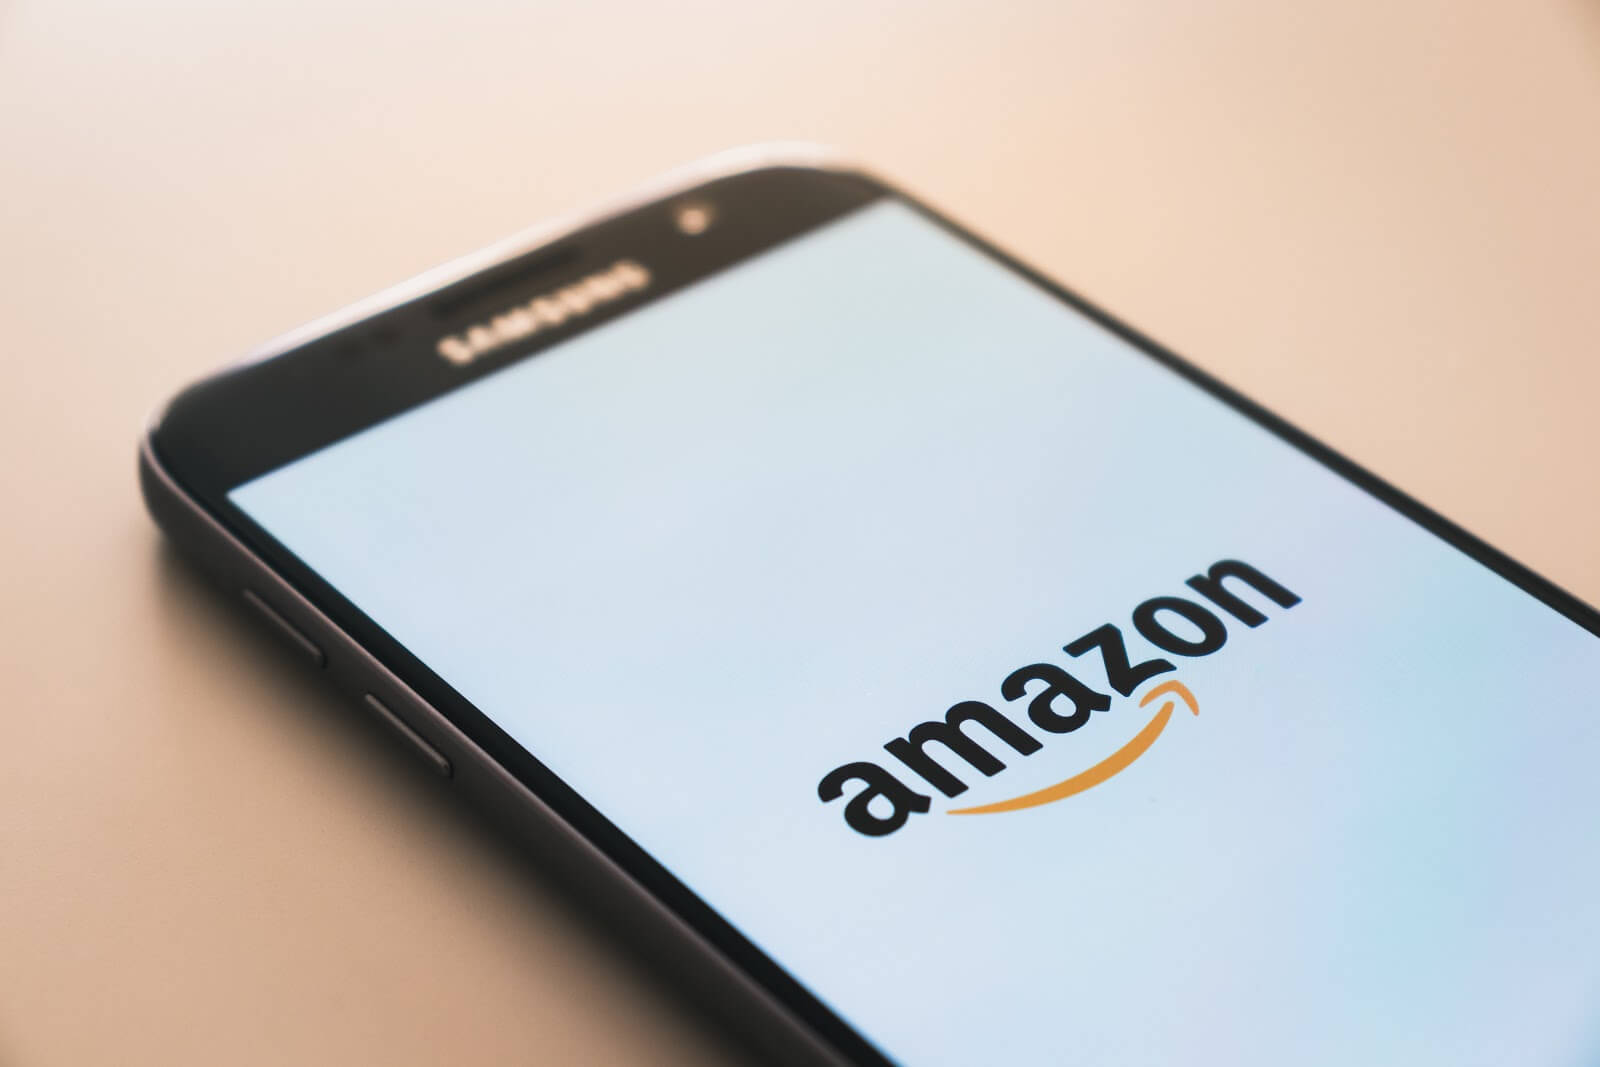 How does Amazon Locker work: the Amazon logo on a smartphone screen